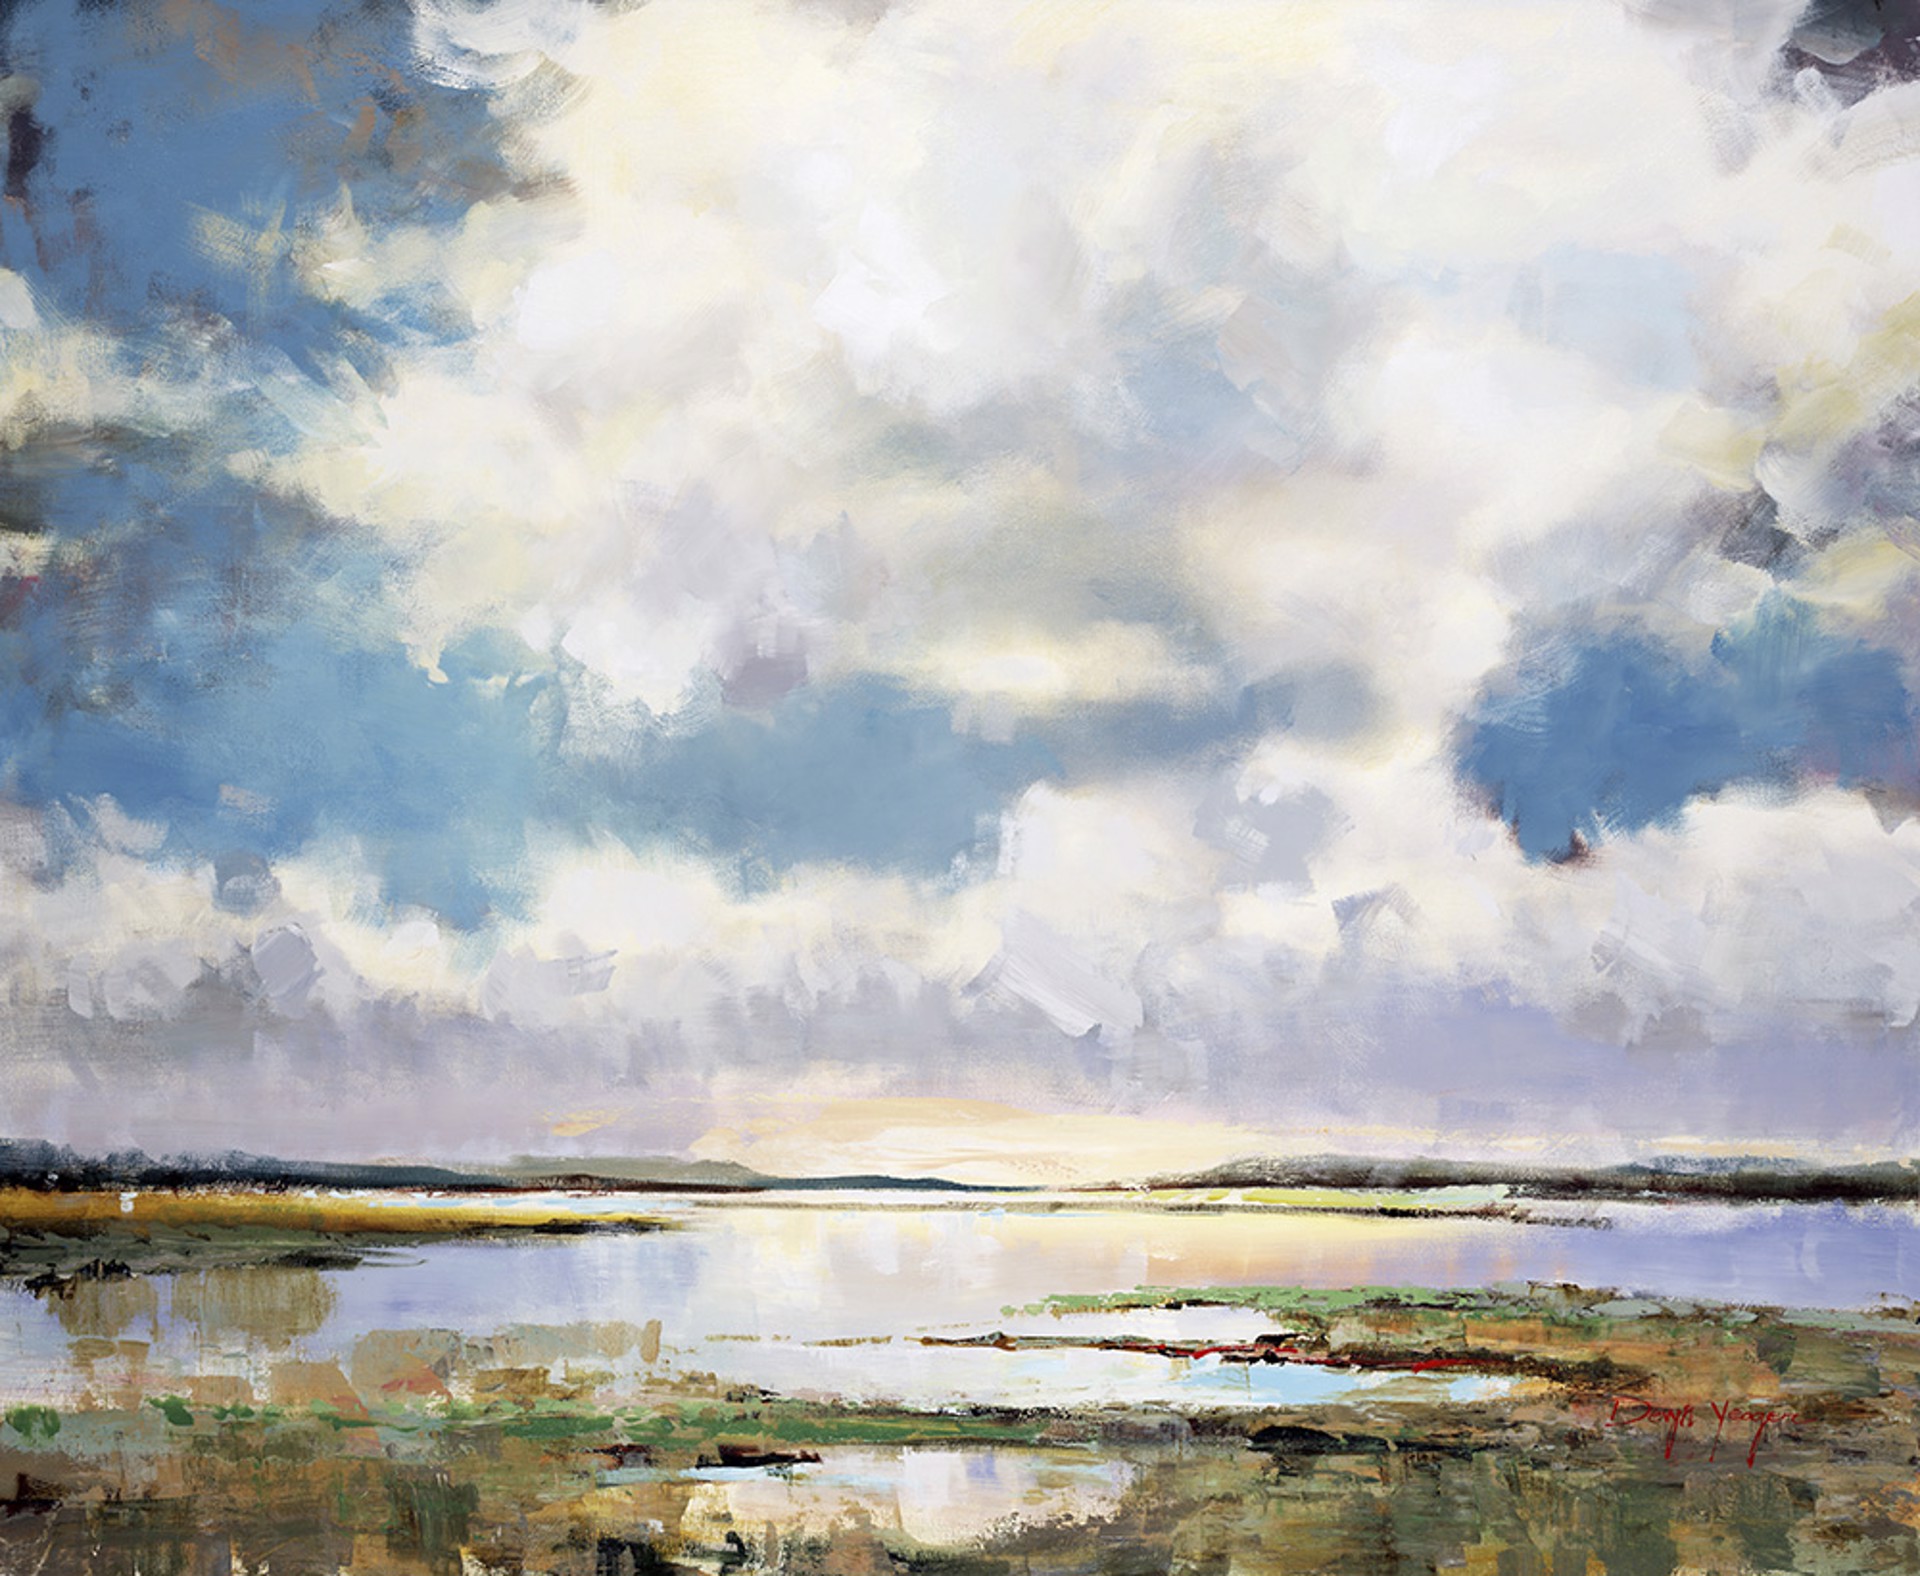 Cloudland by Devyn Yeager